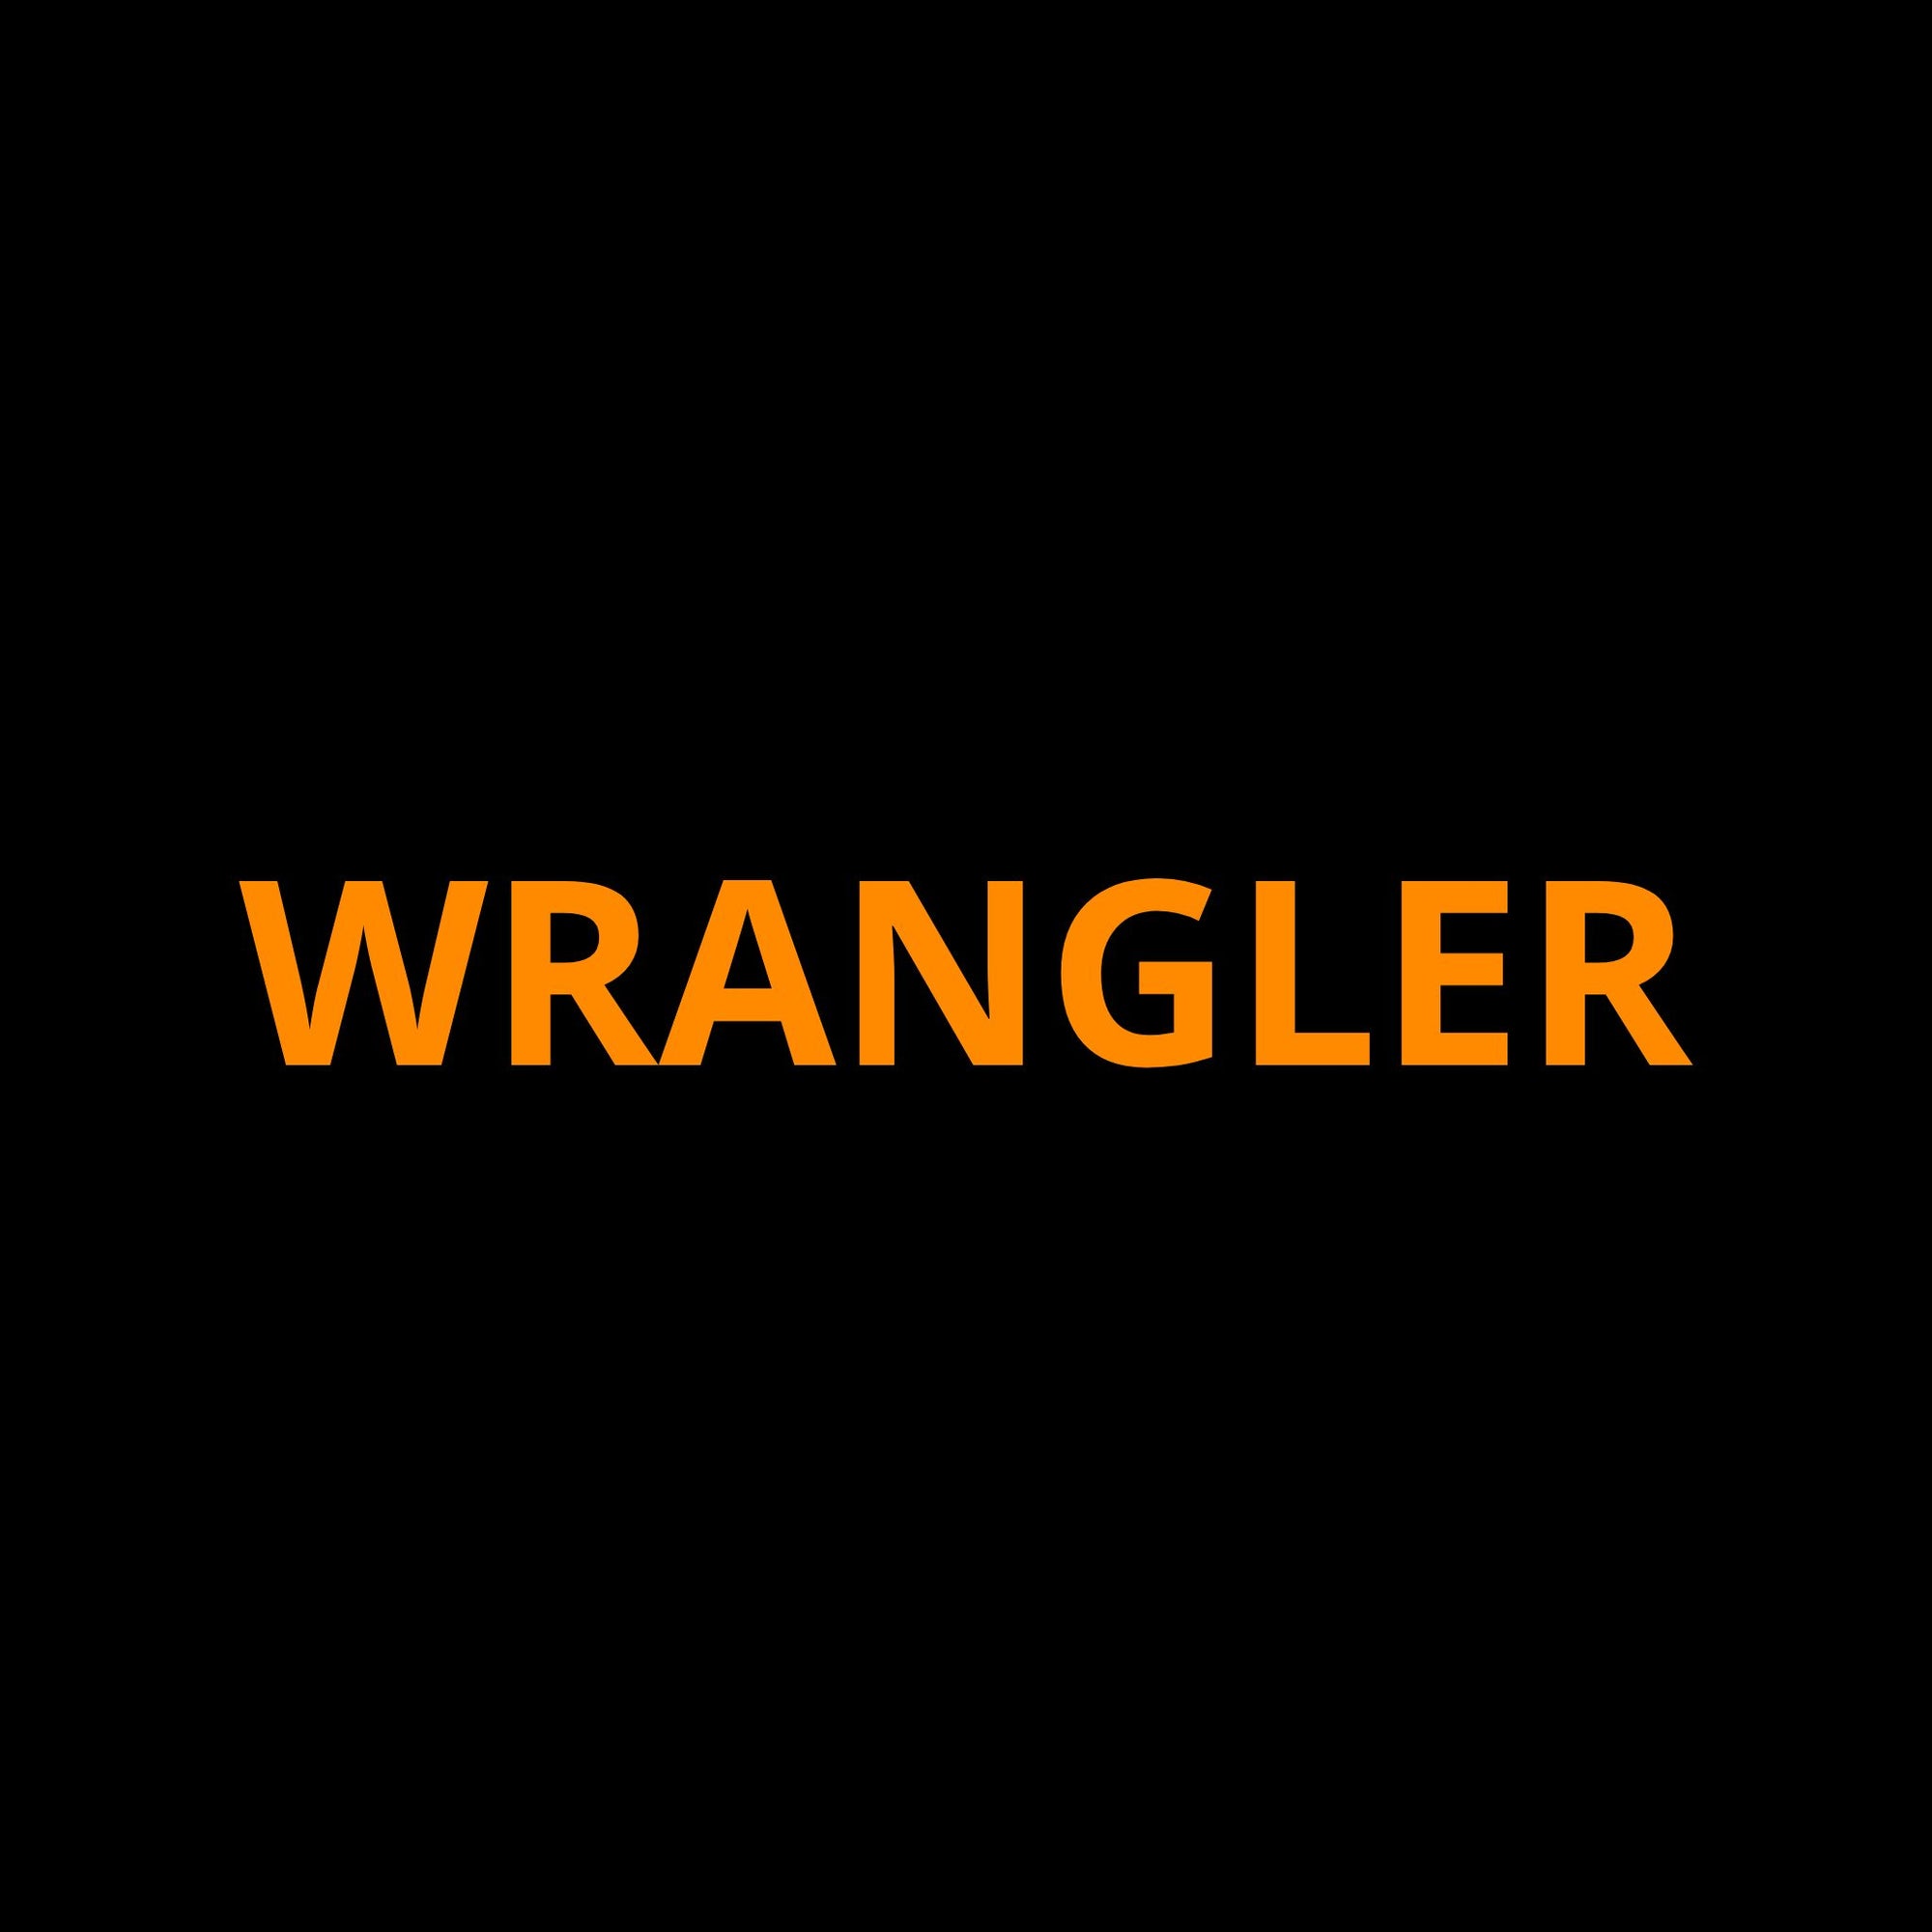 Jeep Wrangler Screen ProTech Kit